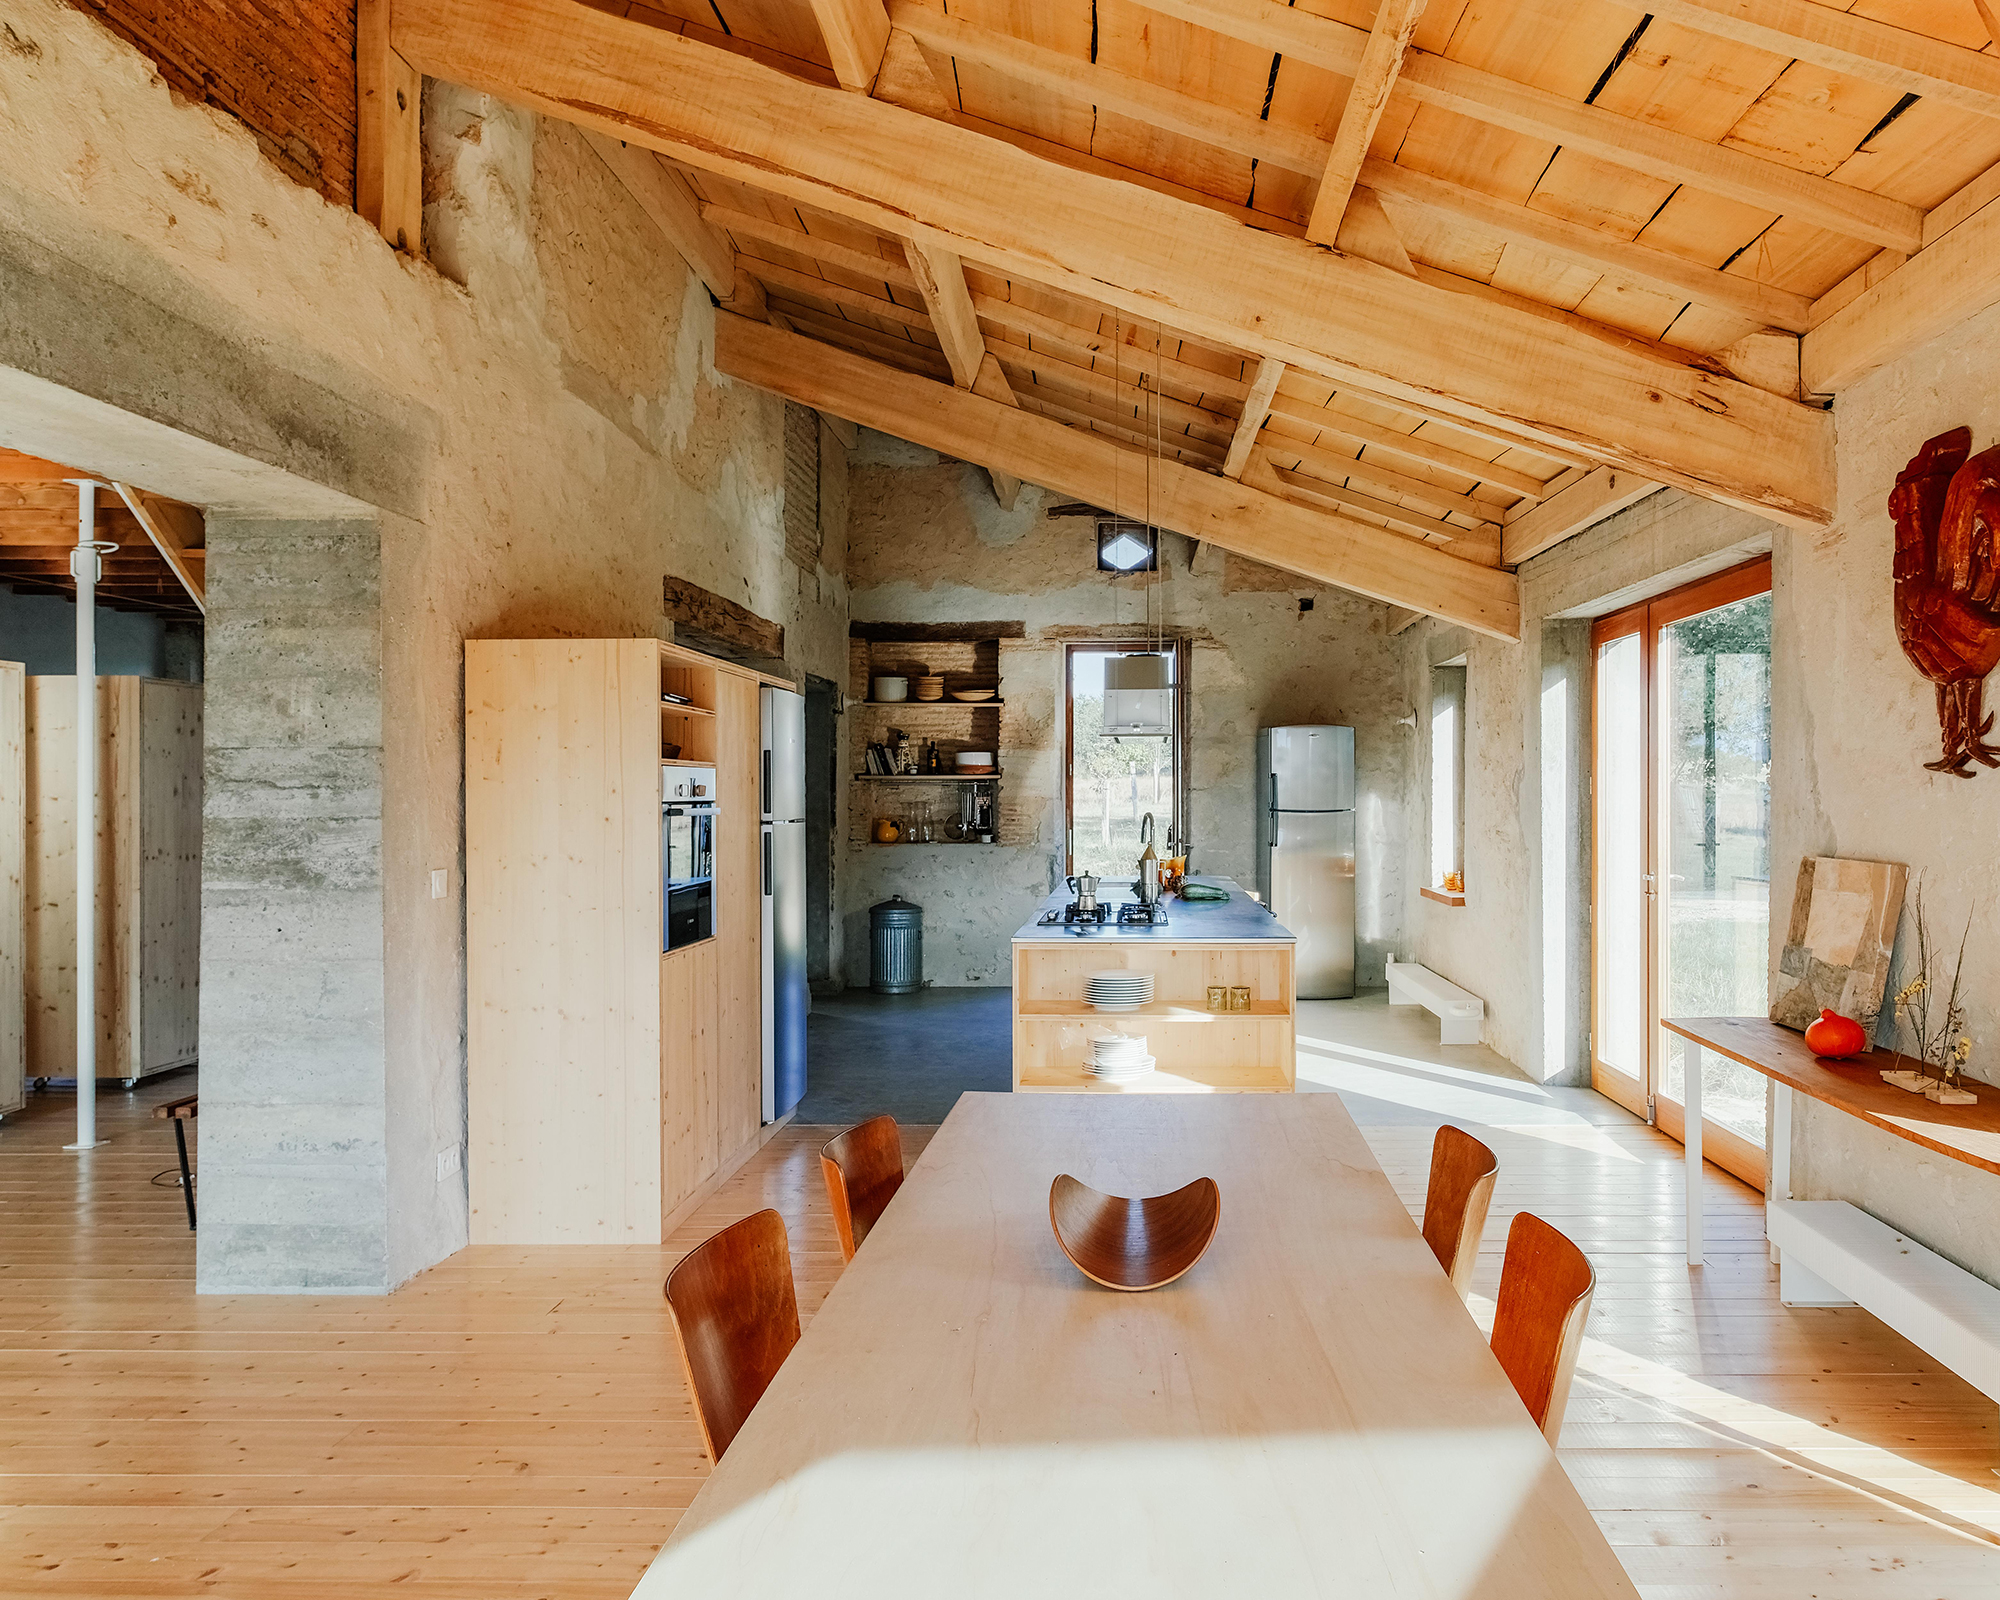 Garrelis Farm by Atelier Boteko, interior detail, dining room